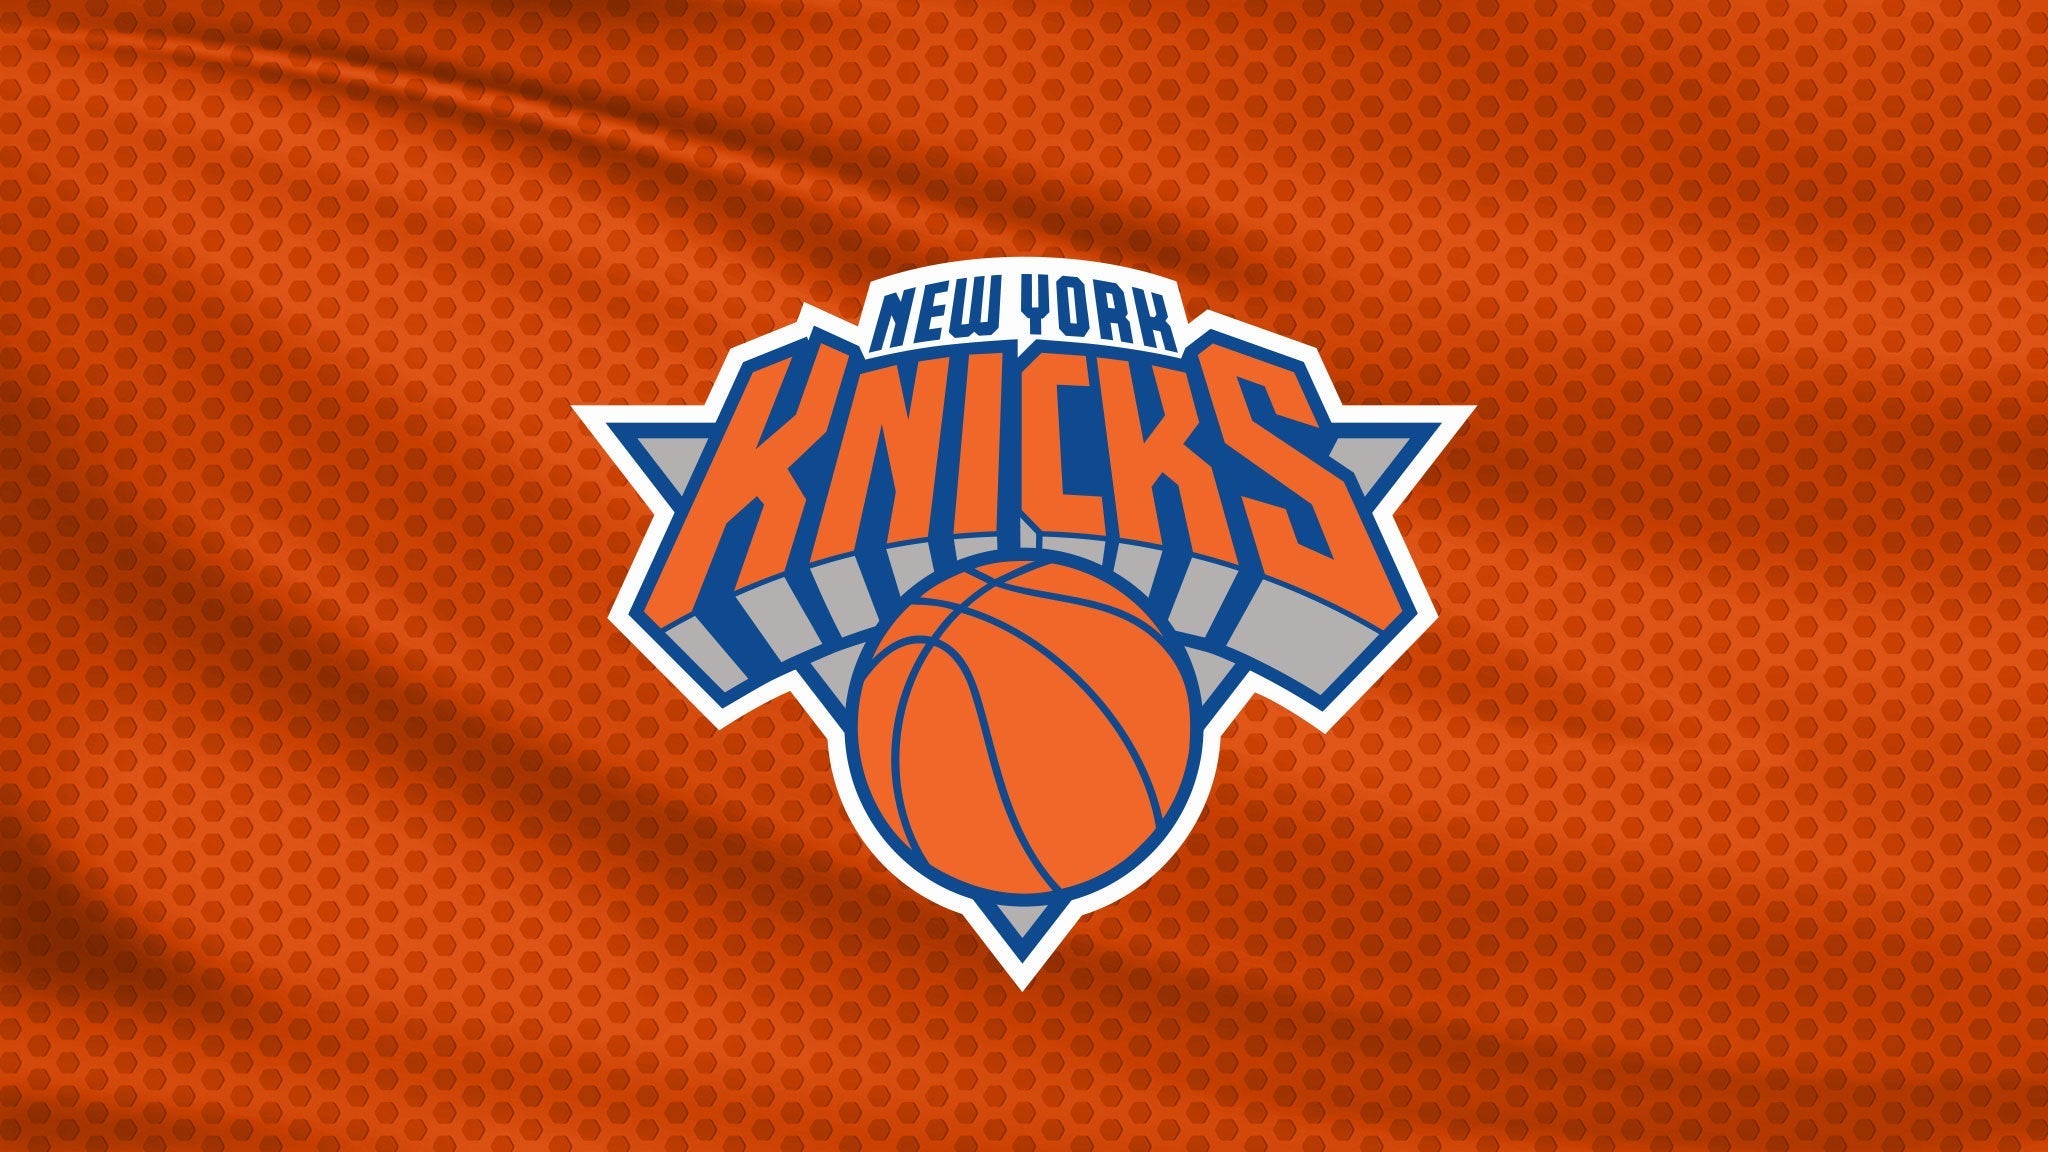 New York Knicks Road Game Watch Party presale information on freepresalepasswords.com